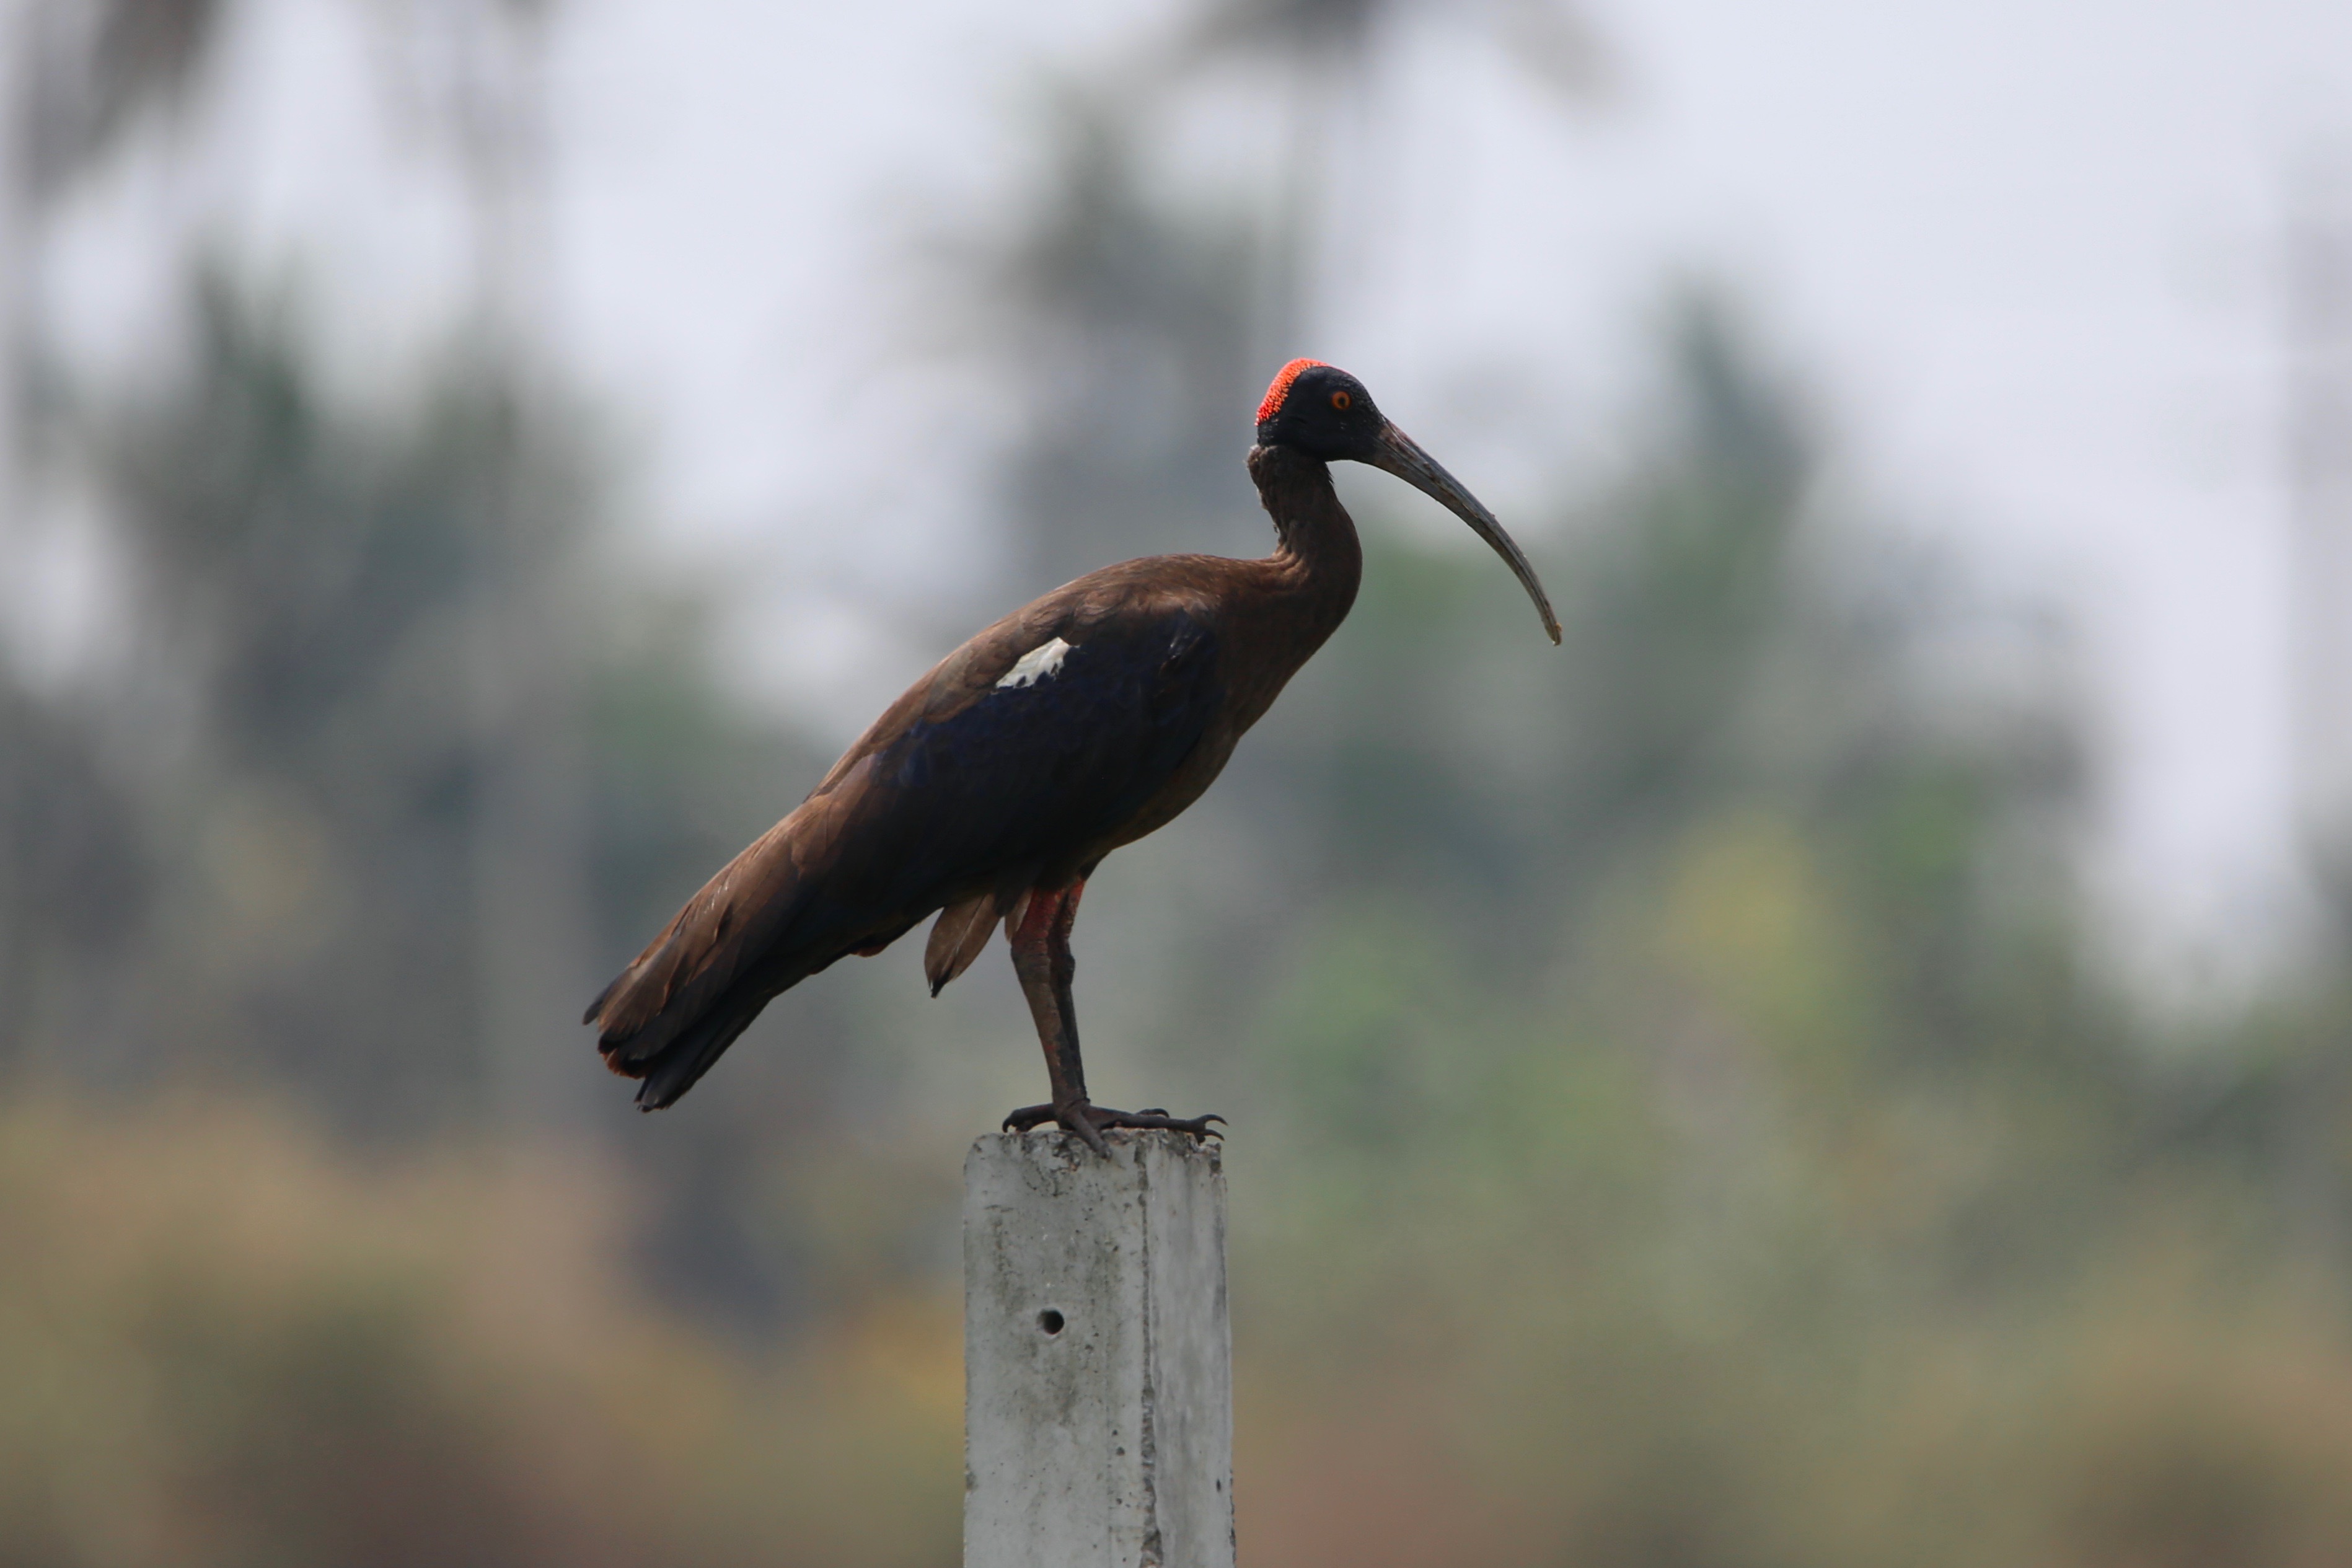 Red-naped ibis, Birds of Karnataka, India